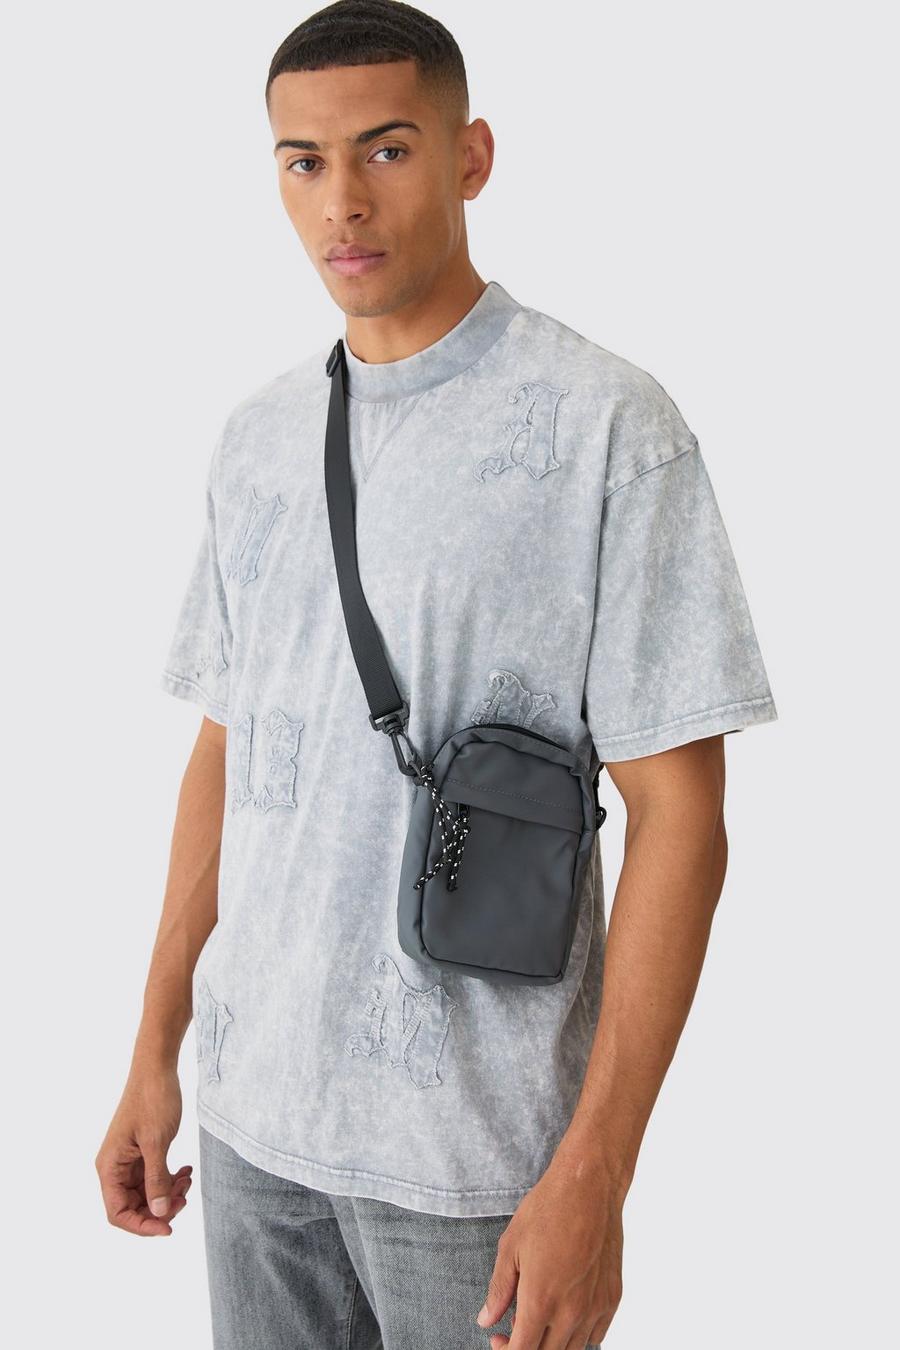 Basic Messengar Bag In Charcoal